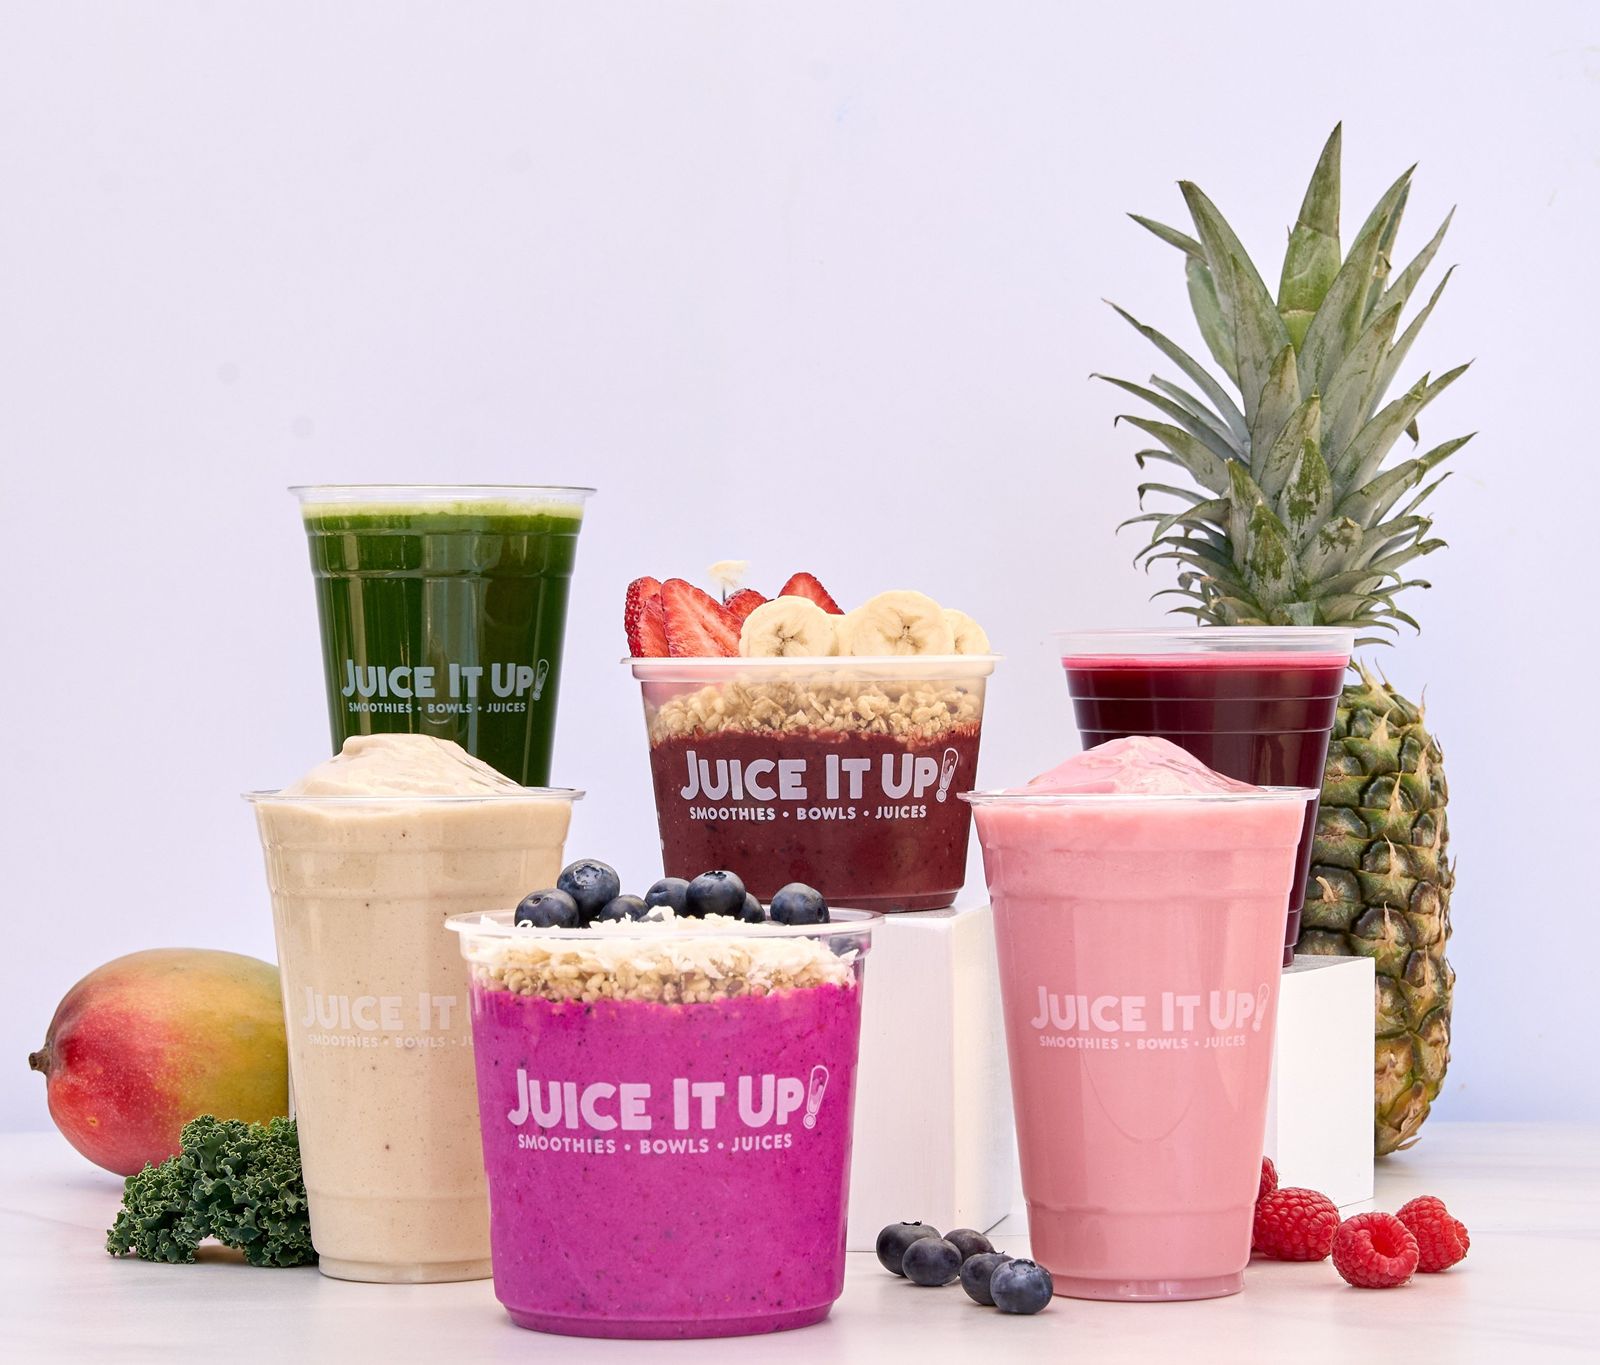 Juice It Up! Opens Inaugural Central Coast Location in Santa Maria, California